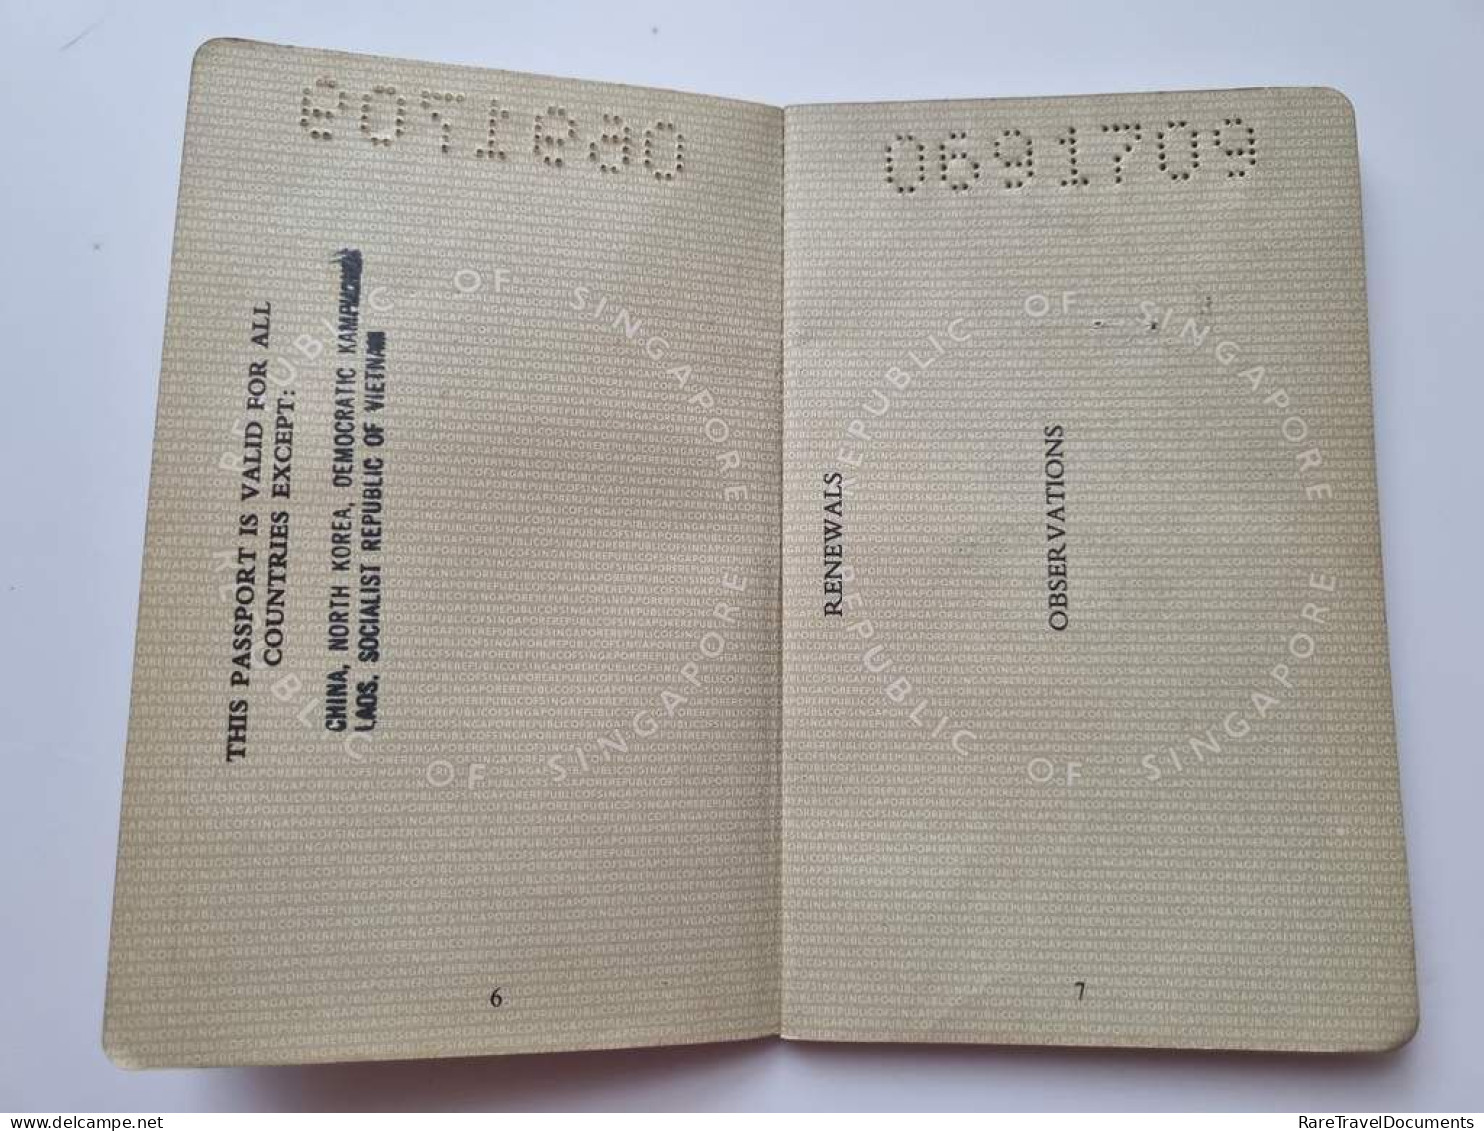 SINGAPORE Passport Passeport Reisepass of a School Principal